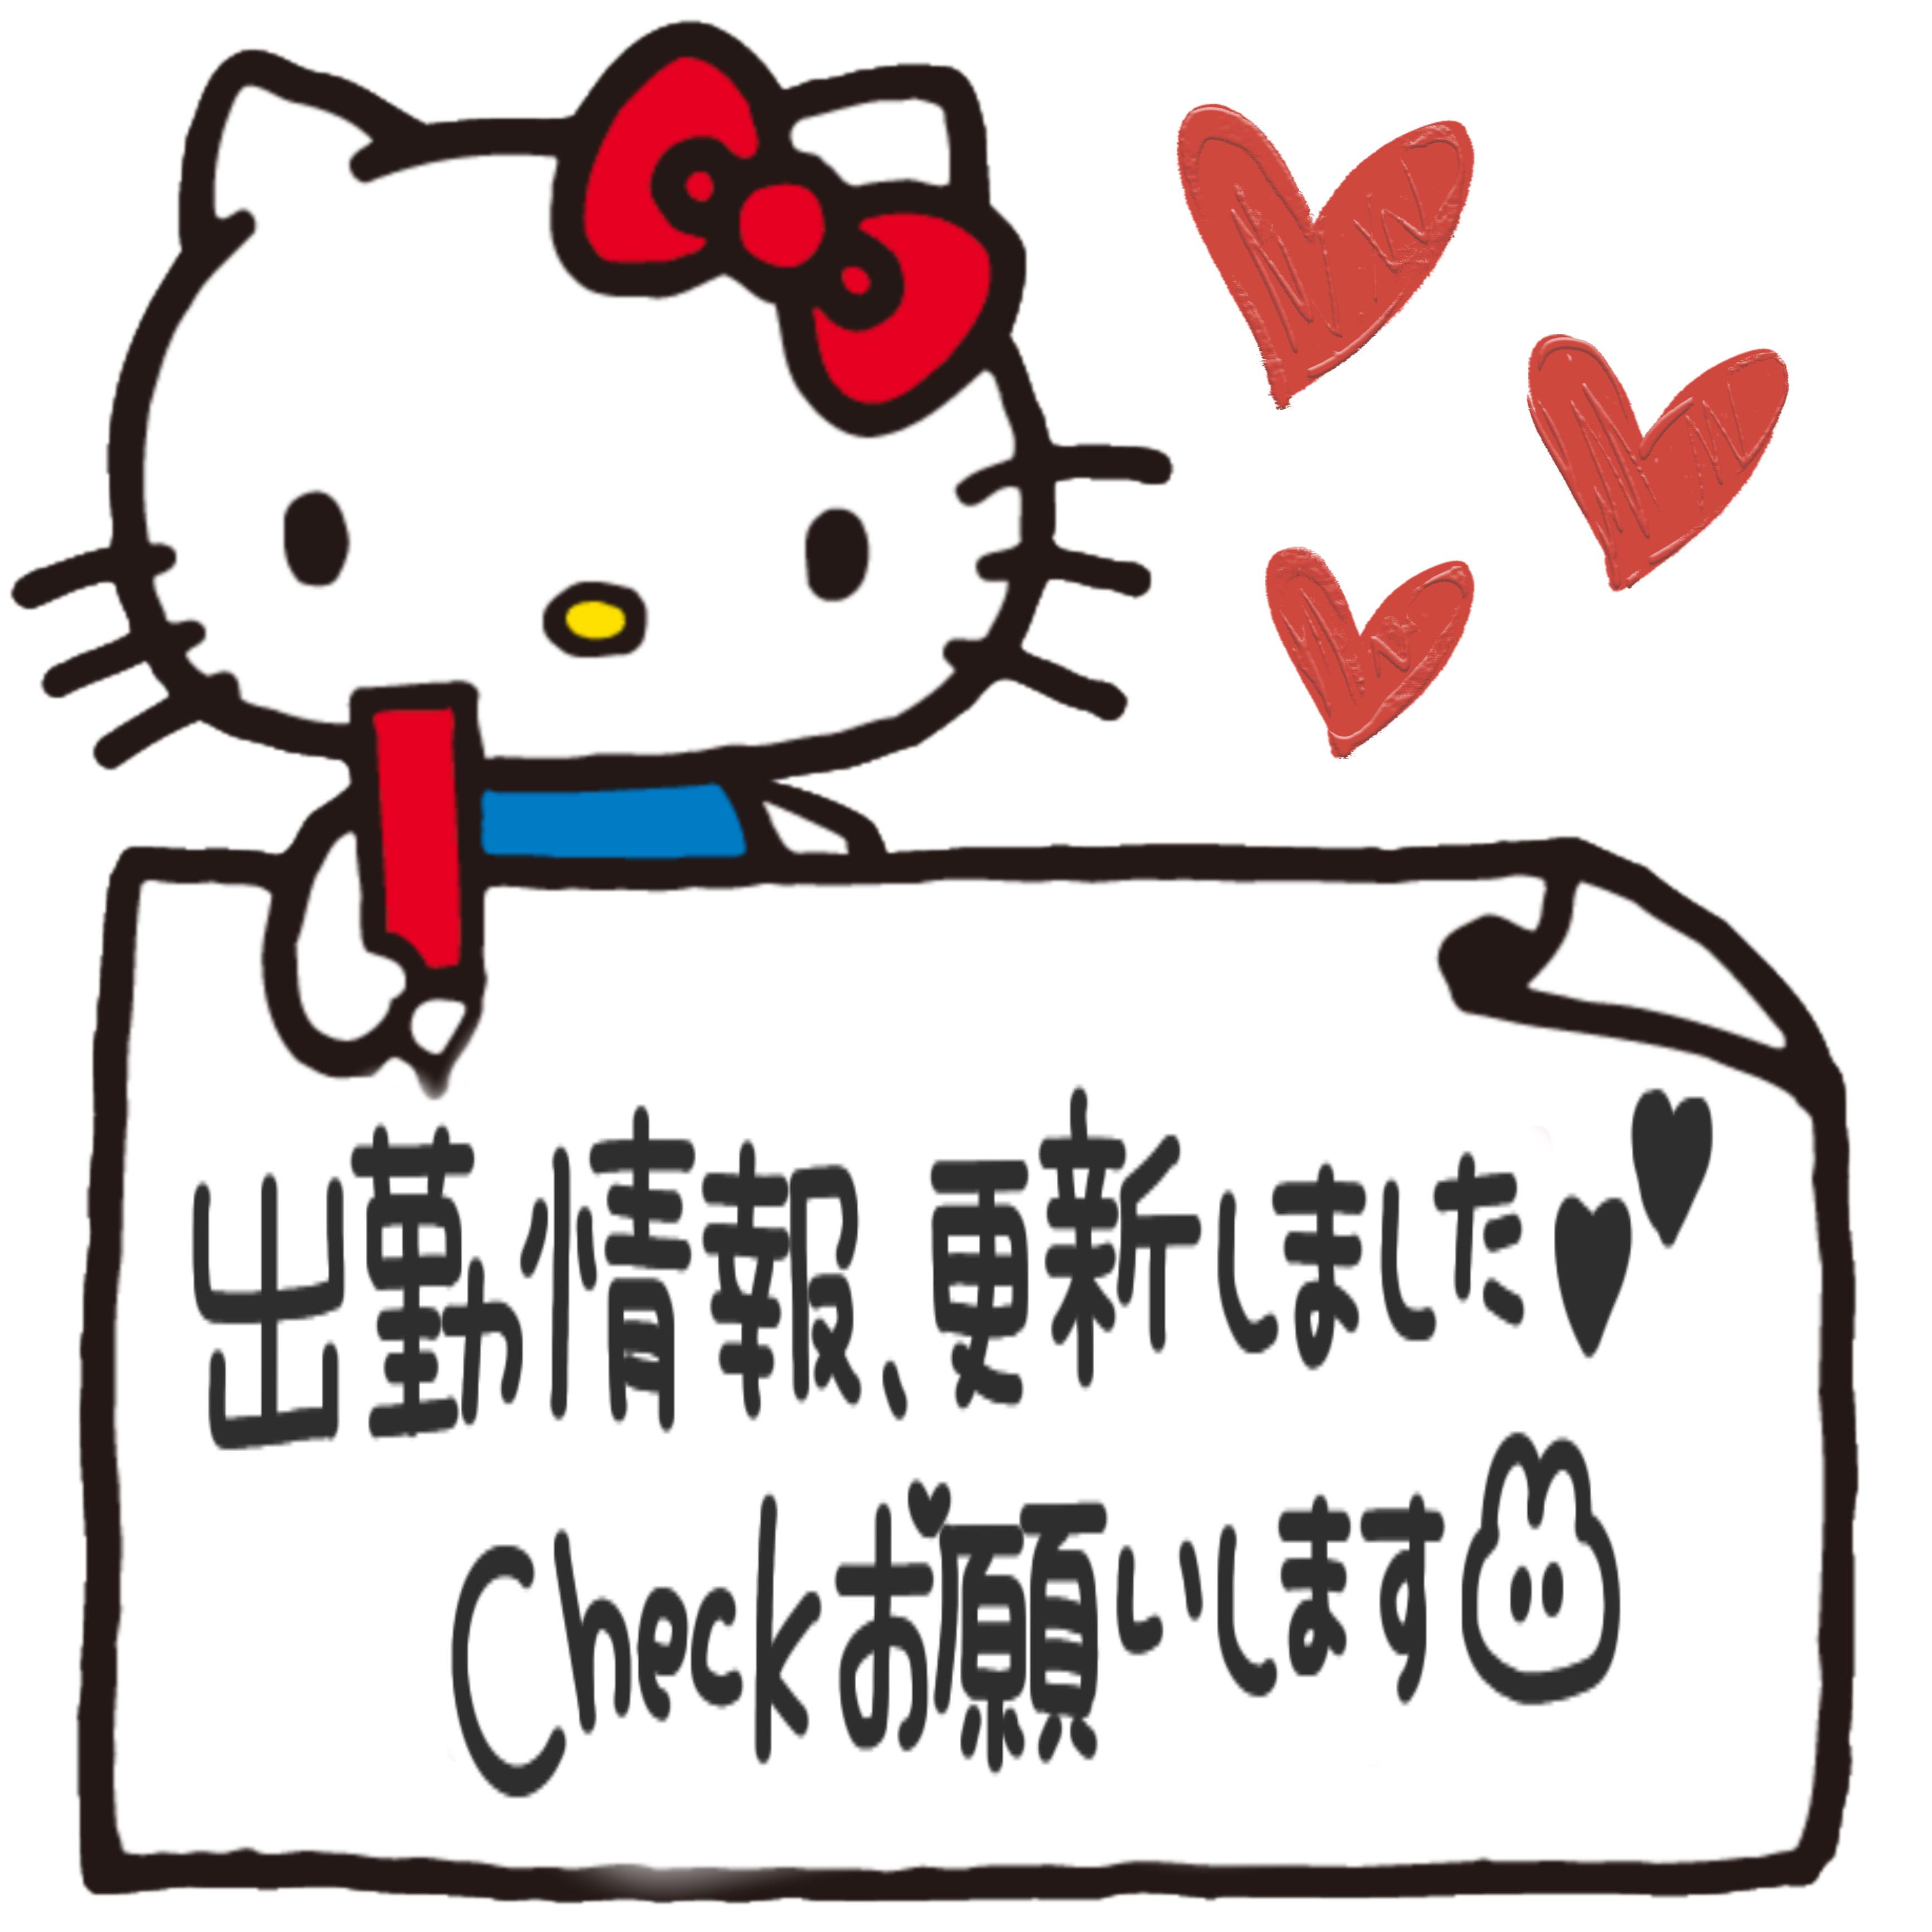 来週の<img class="emojione" alt="🗓️" title=":calendar_spiral:" src="https://fuzoku.jp/assets/img/emojione/1f5d3.png"/><img class="emojione" alt="😗" title=":kissing:" src="https://fuzoku.jp/assets/img/emojione/1f617.png"/>⭐️